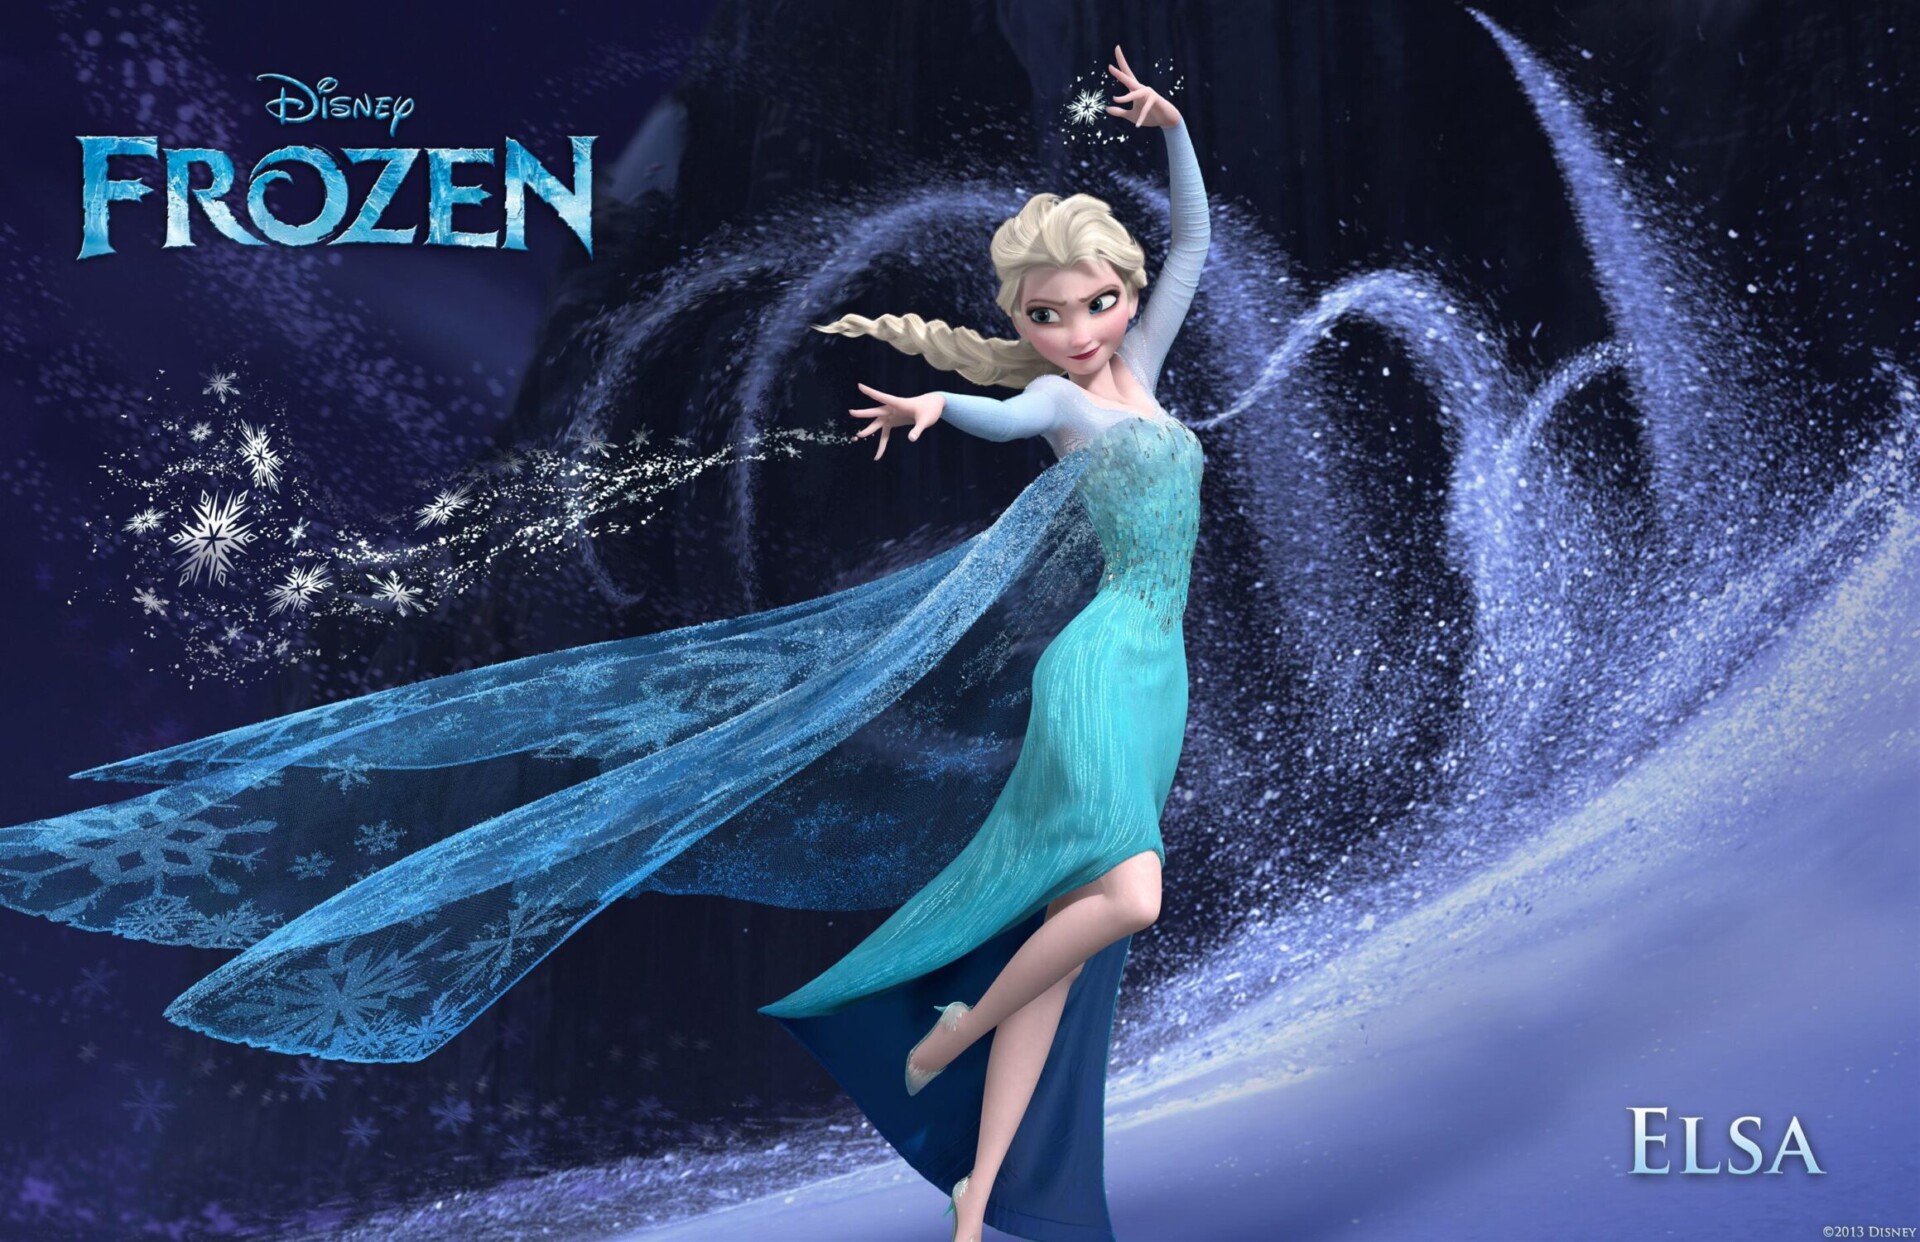 Frozen (2013): A Disney Classic Movie